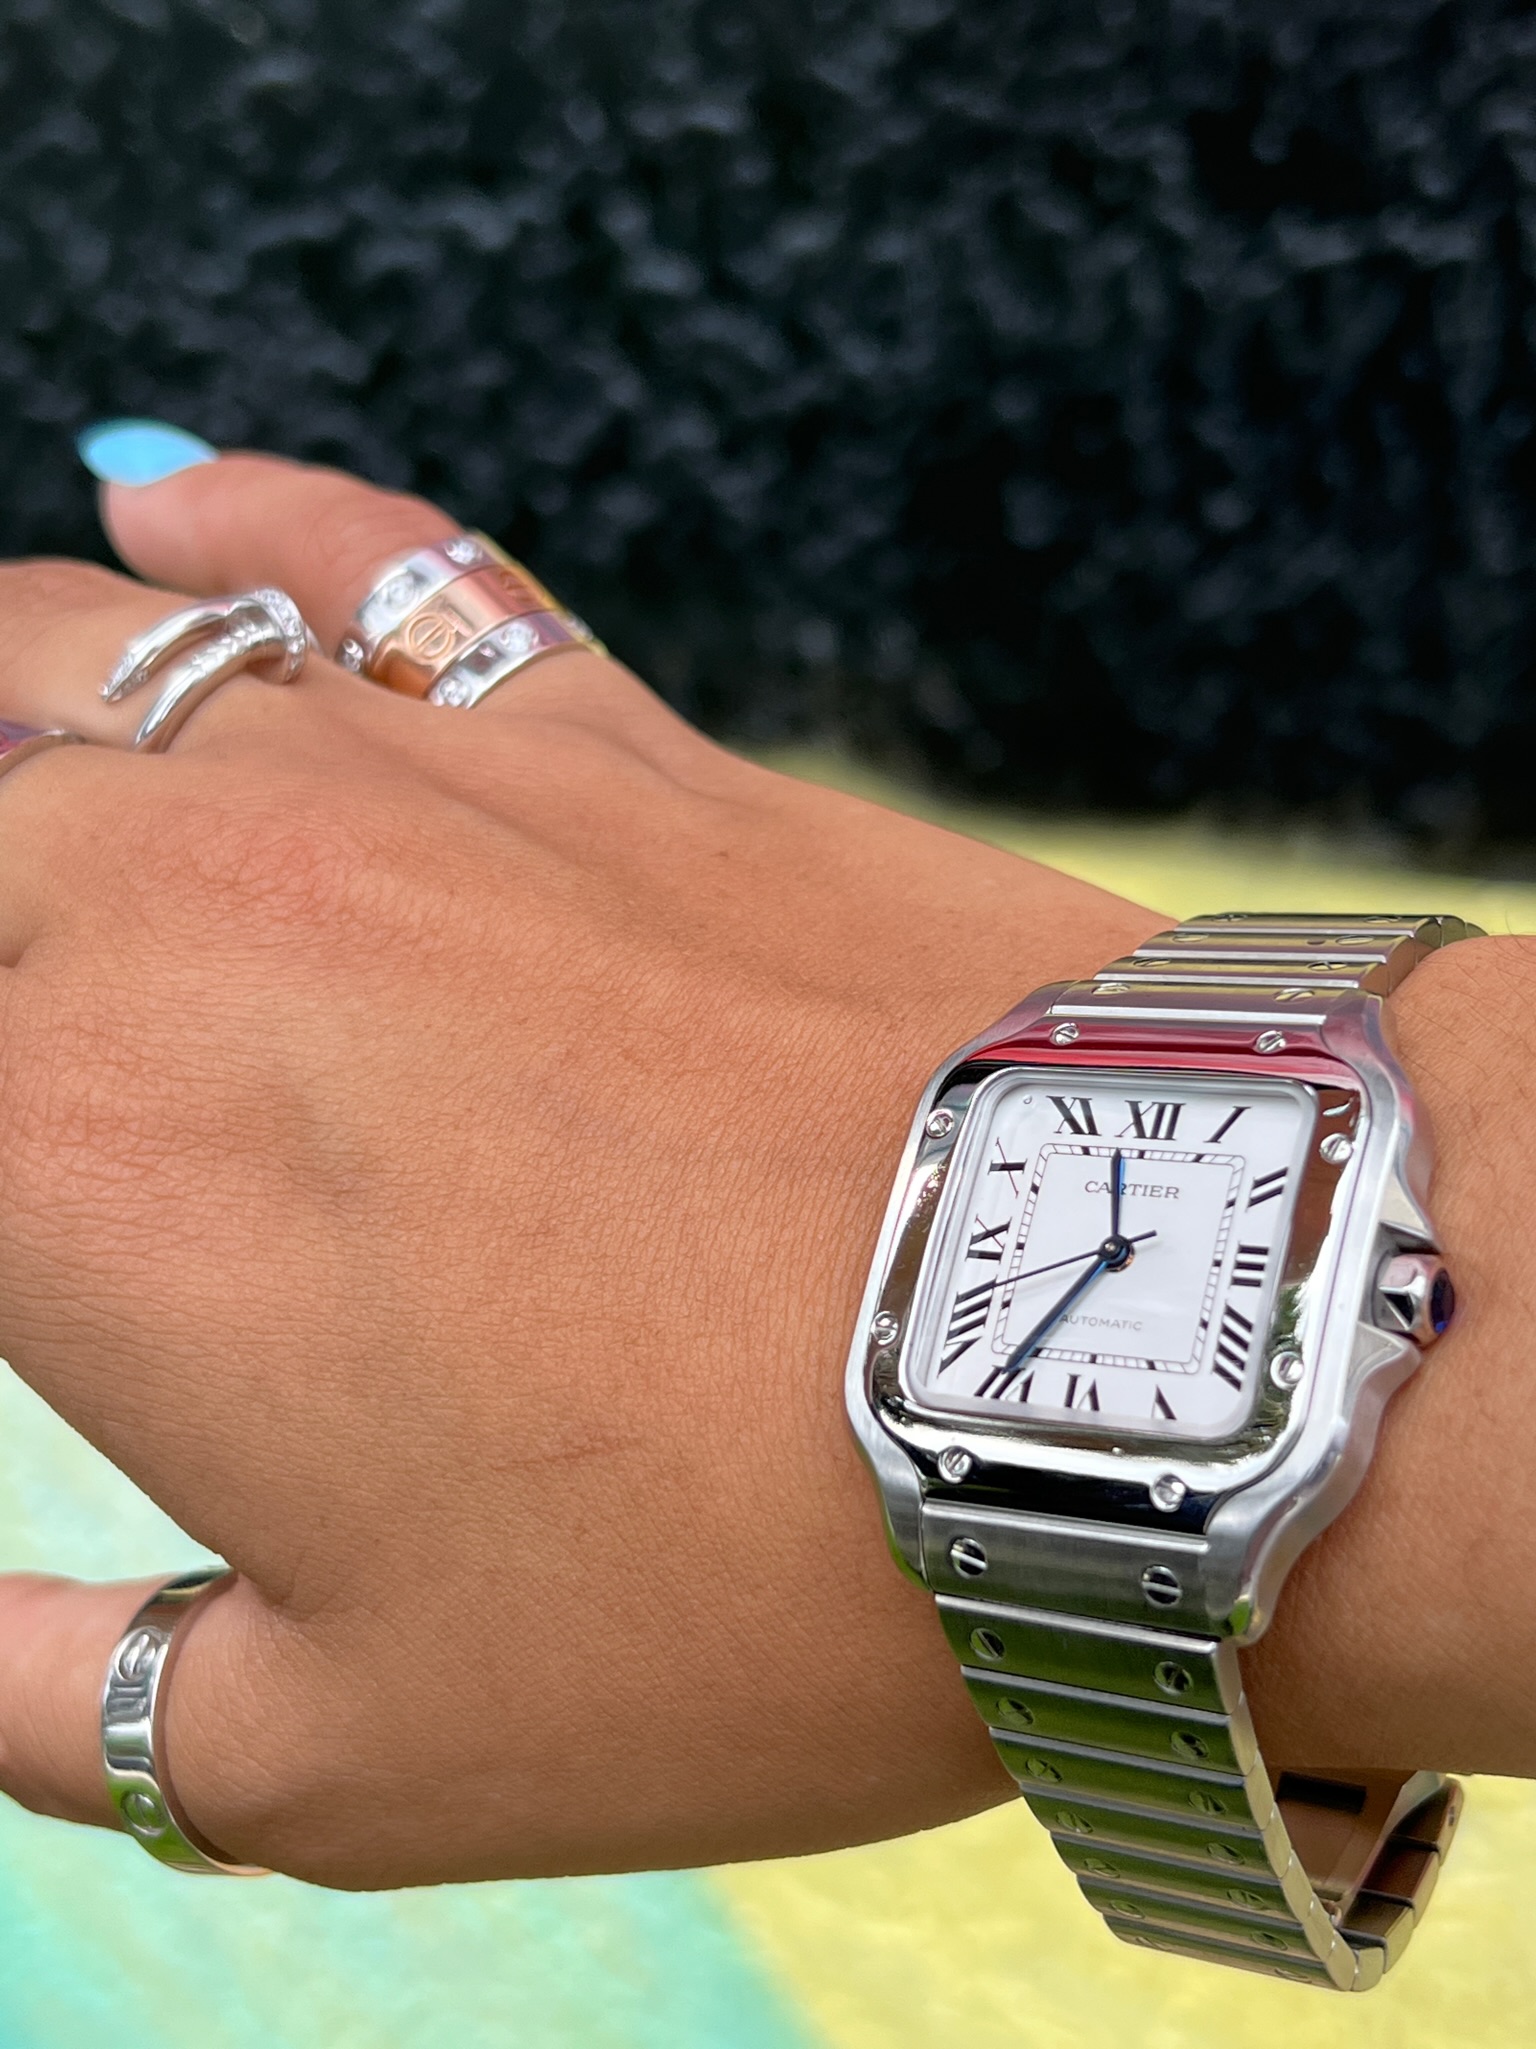 Cartier timekeeping masterpiece